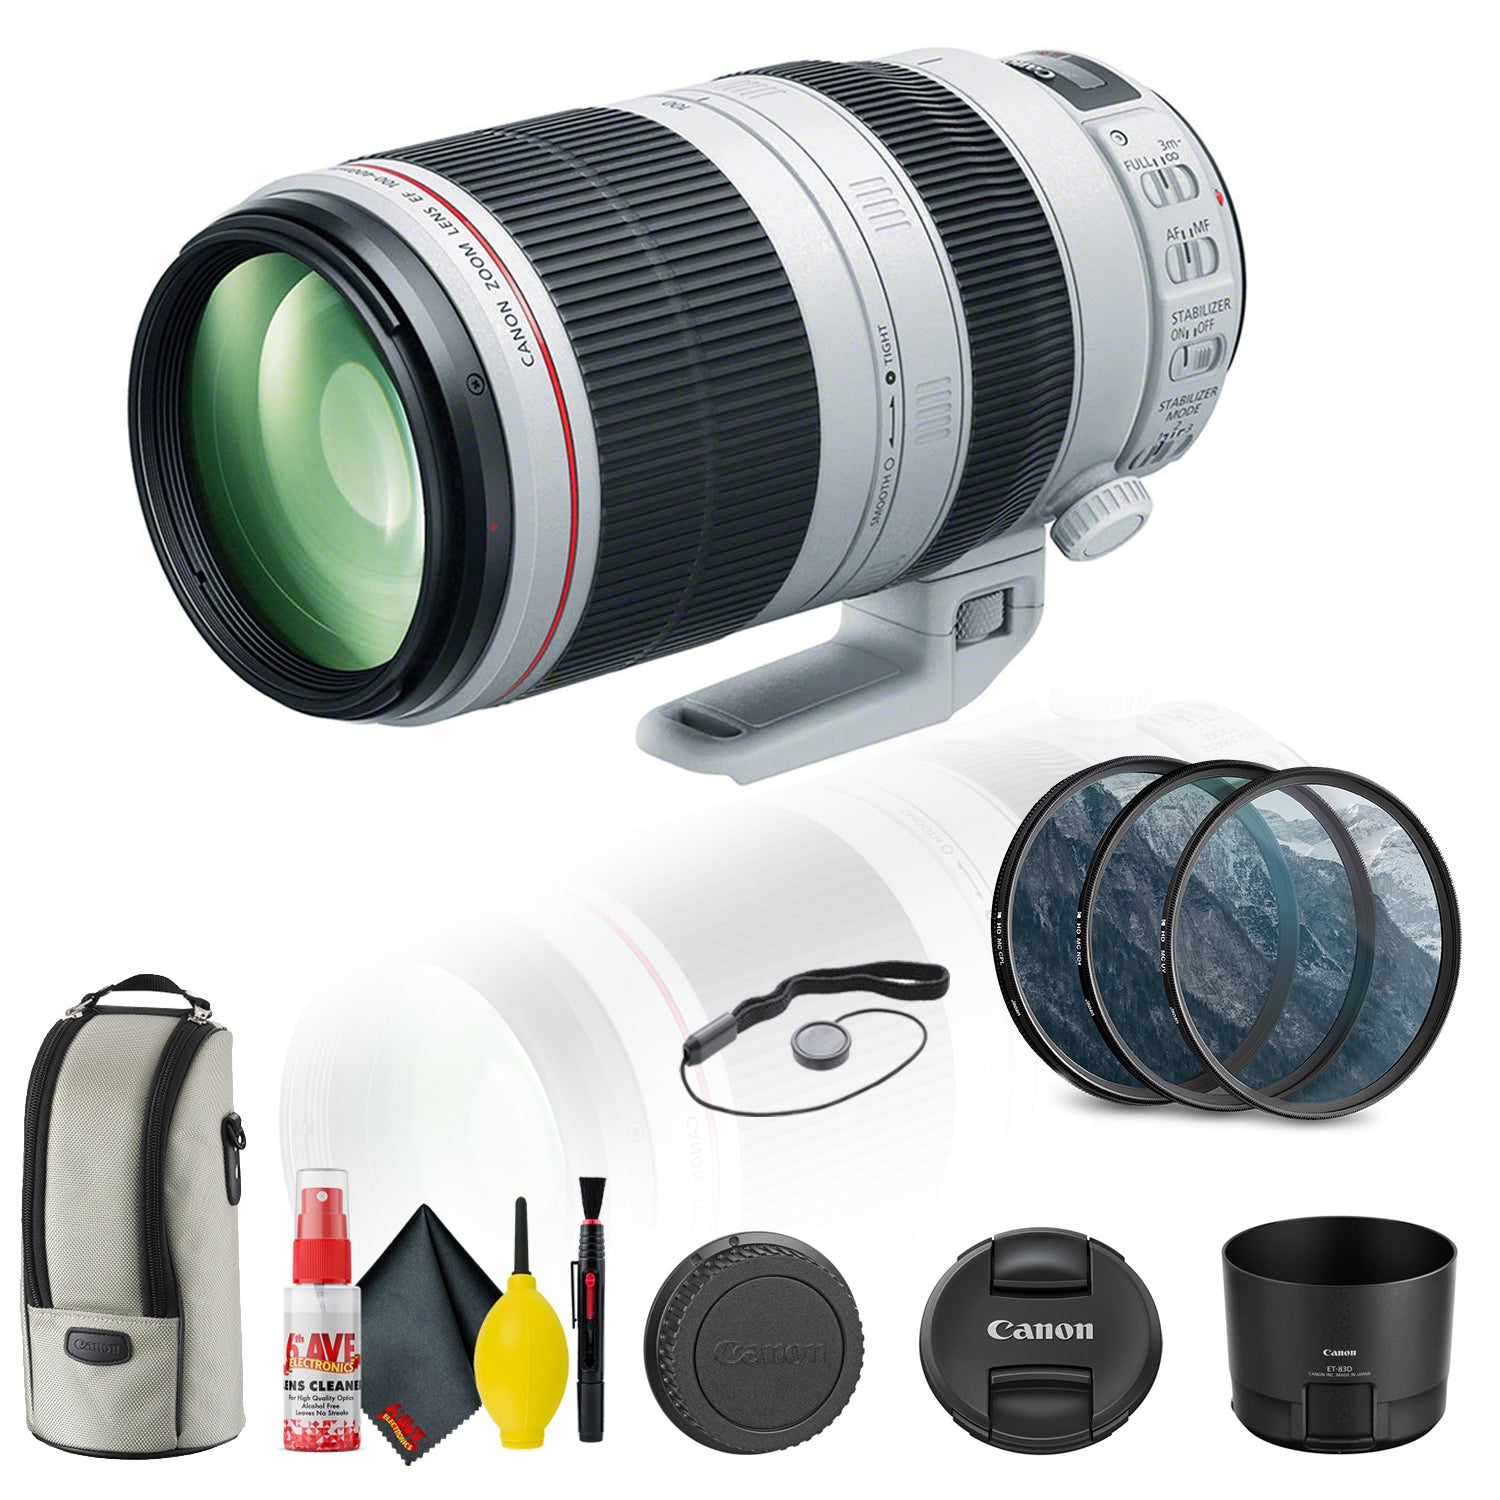 Canon EF 100-400mm f/4.5-5.6L IS II USM Lens (9524B002) + FilterKit + Cap + More